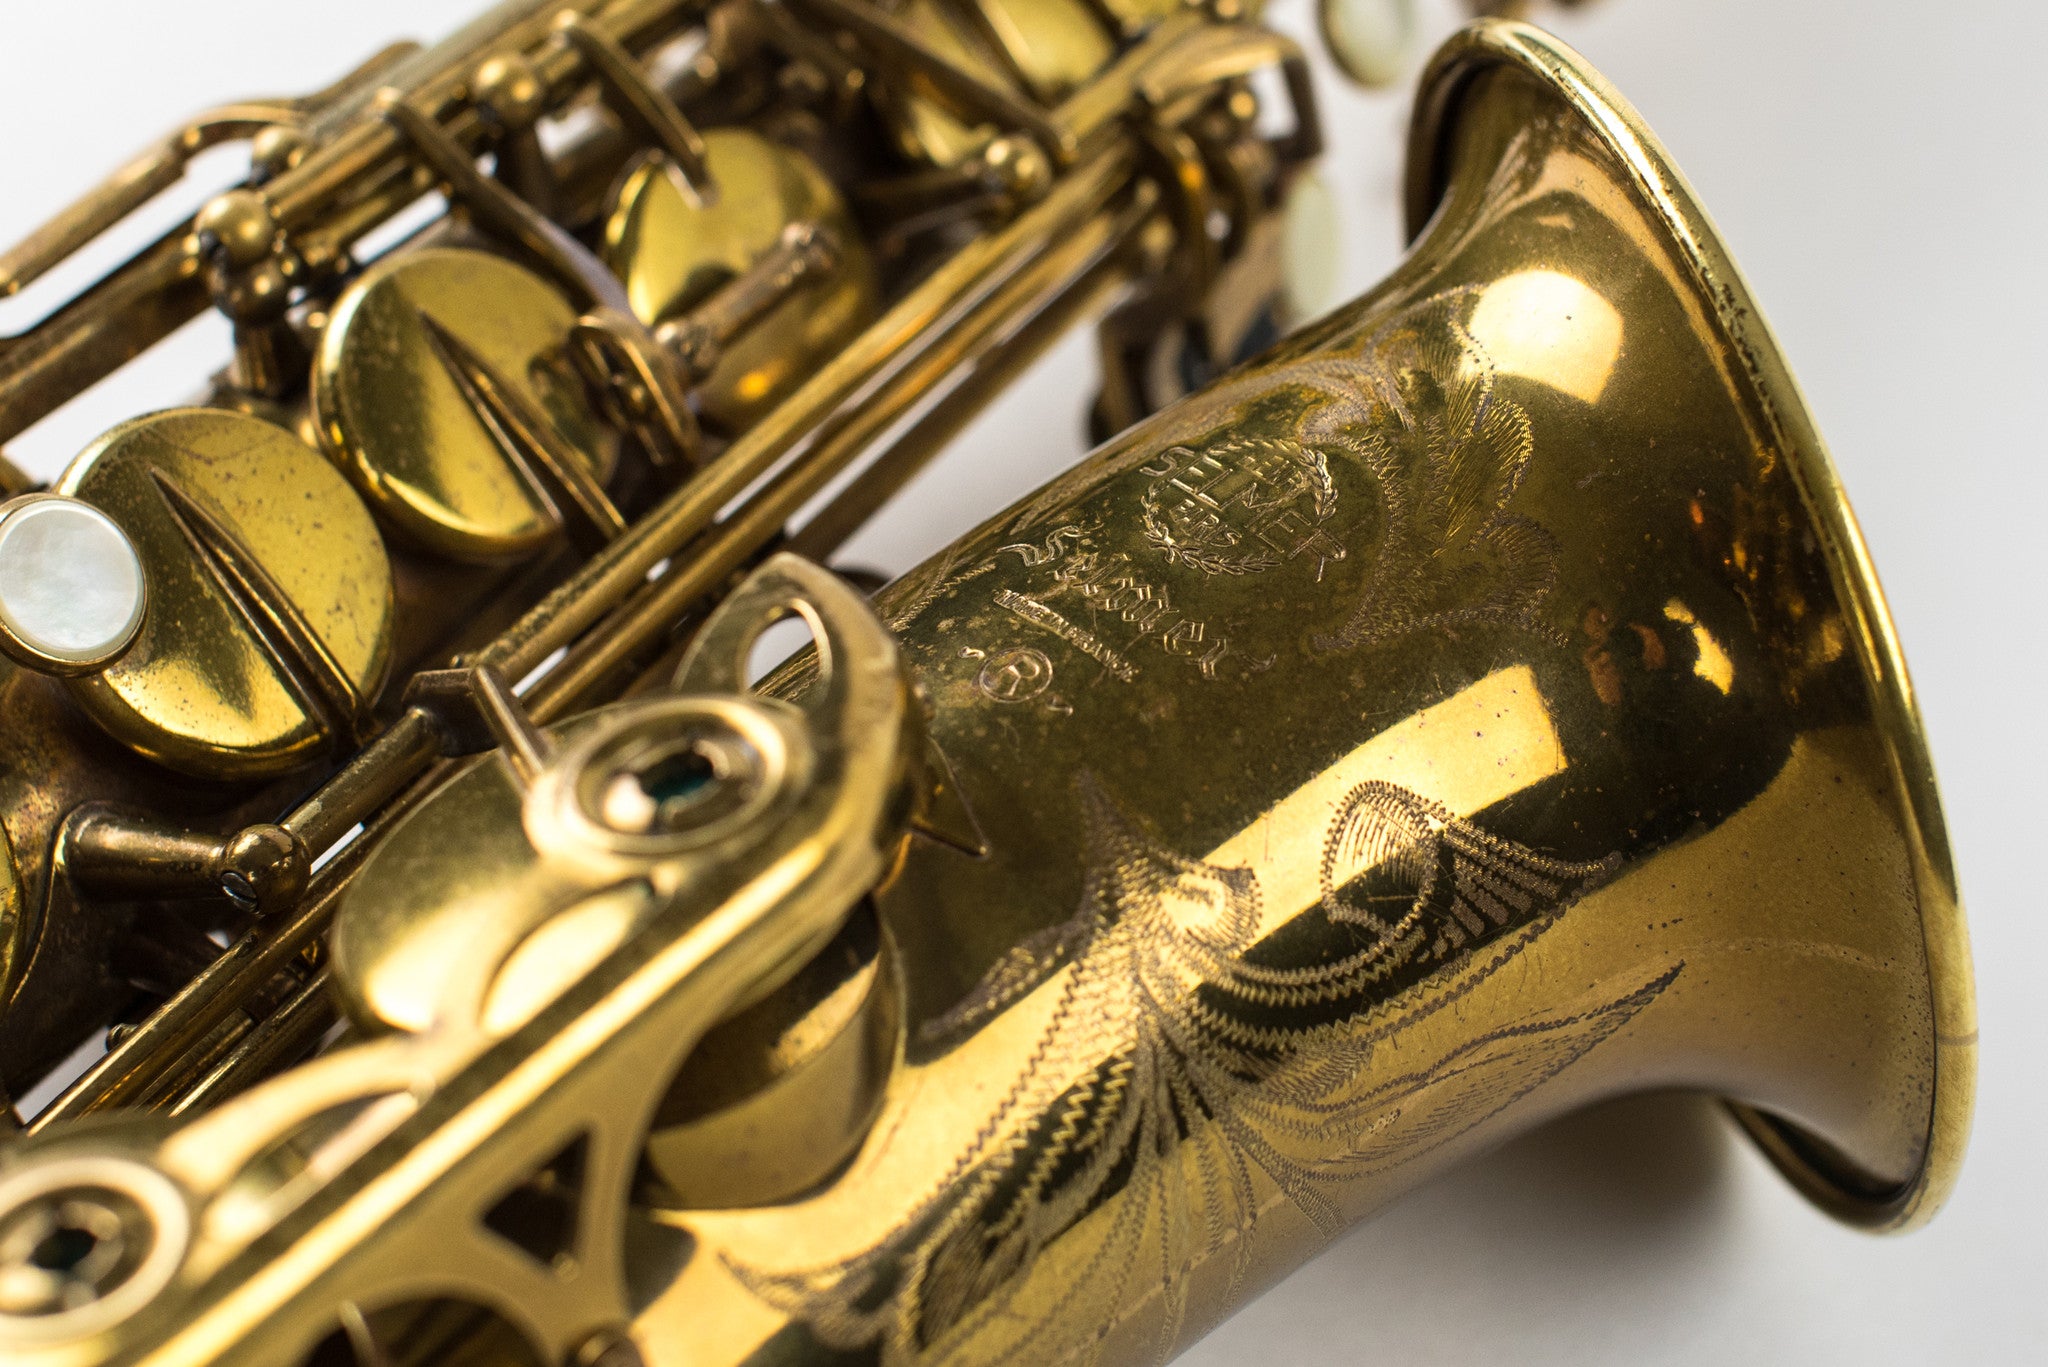 133,xxx Selmer Mark VI Alto Saxophone, 90% Original Lacquer, Fresh Overhaul